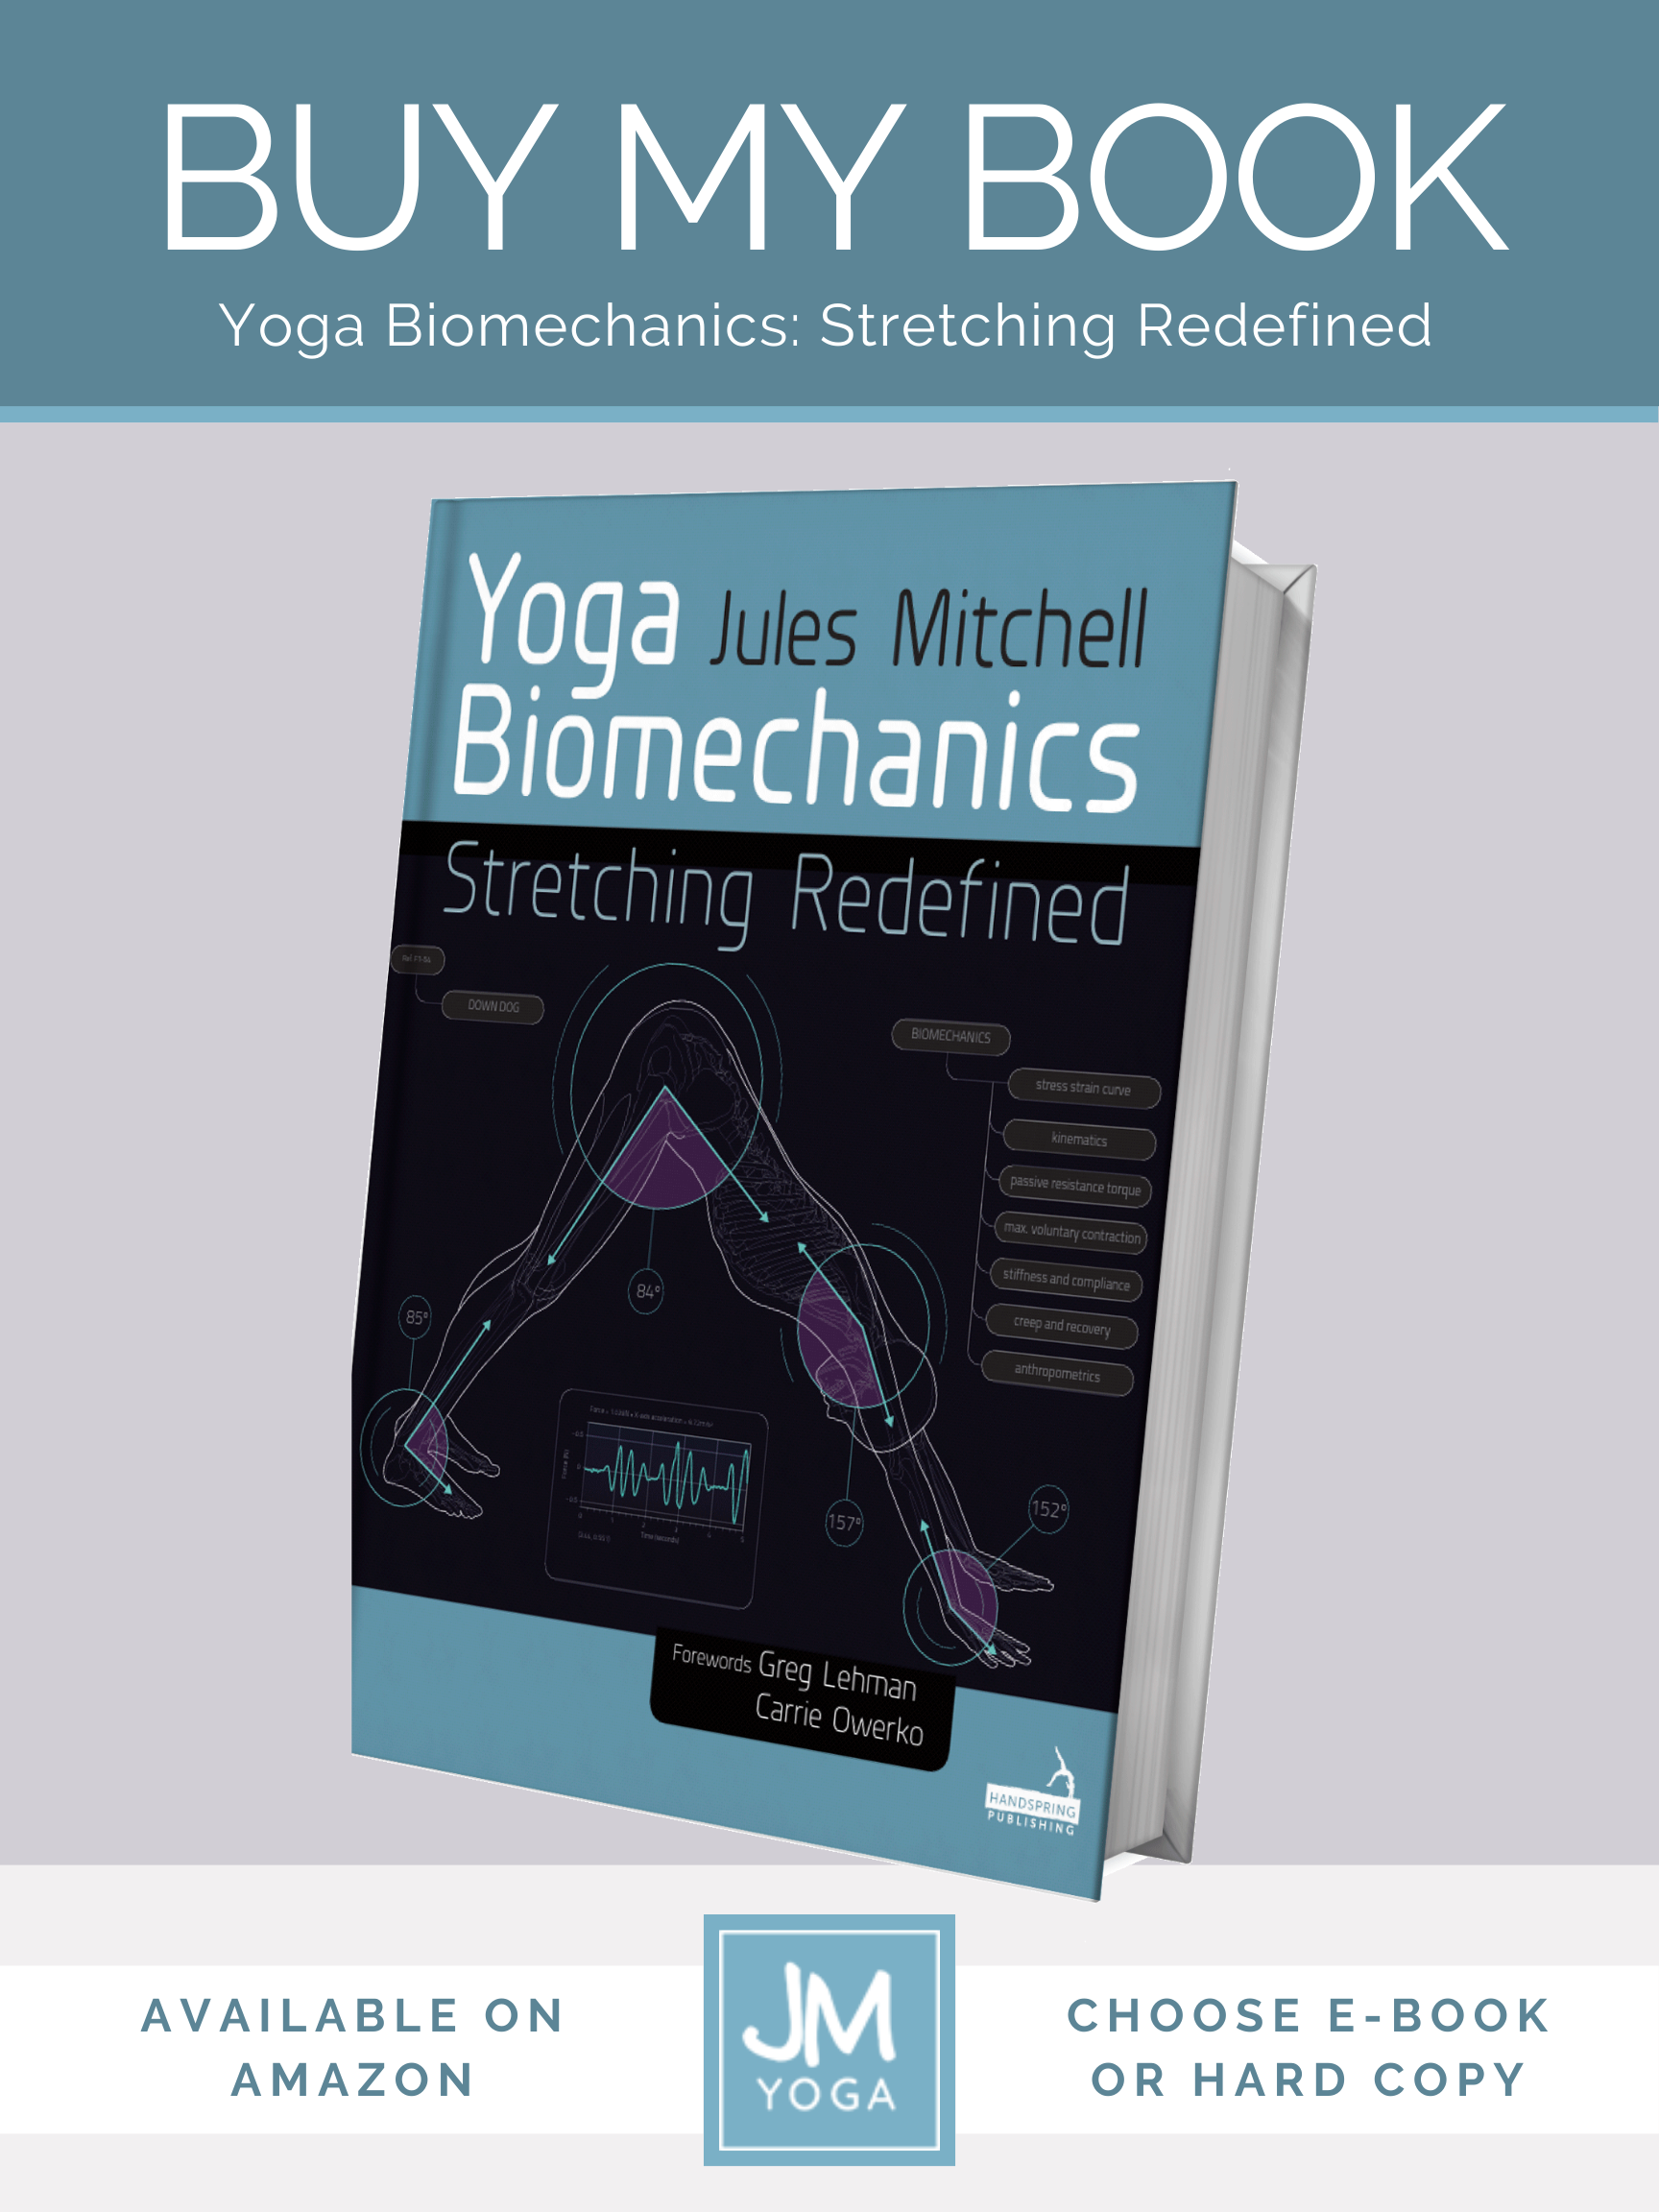 Buy my book - Yoga Biomechanics